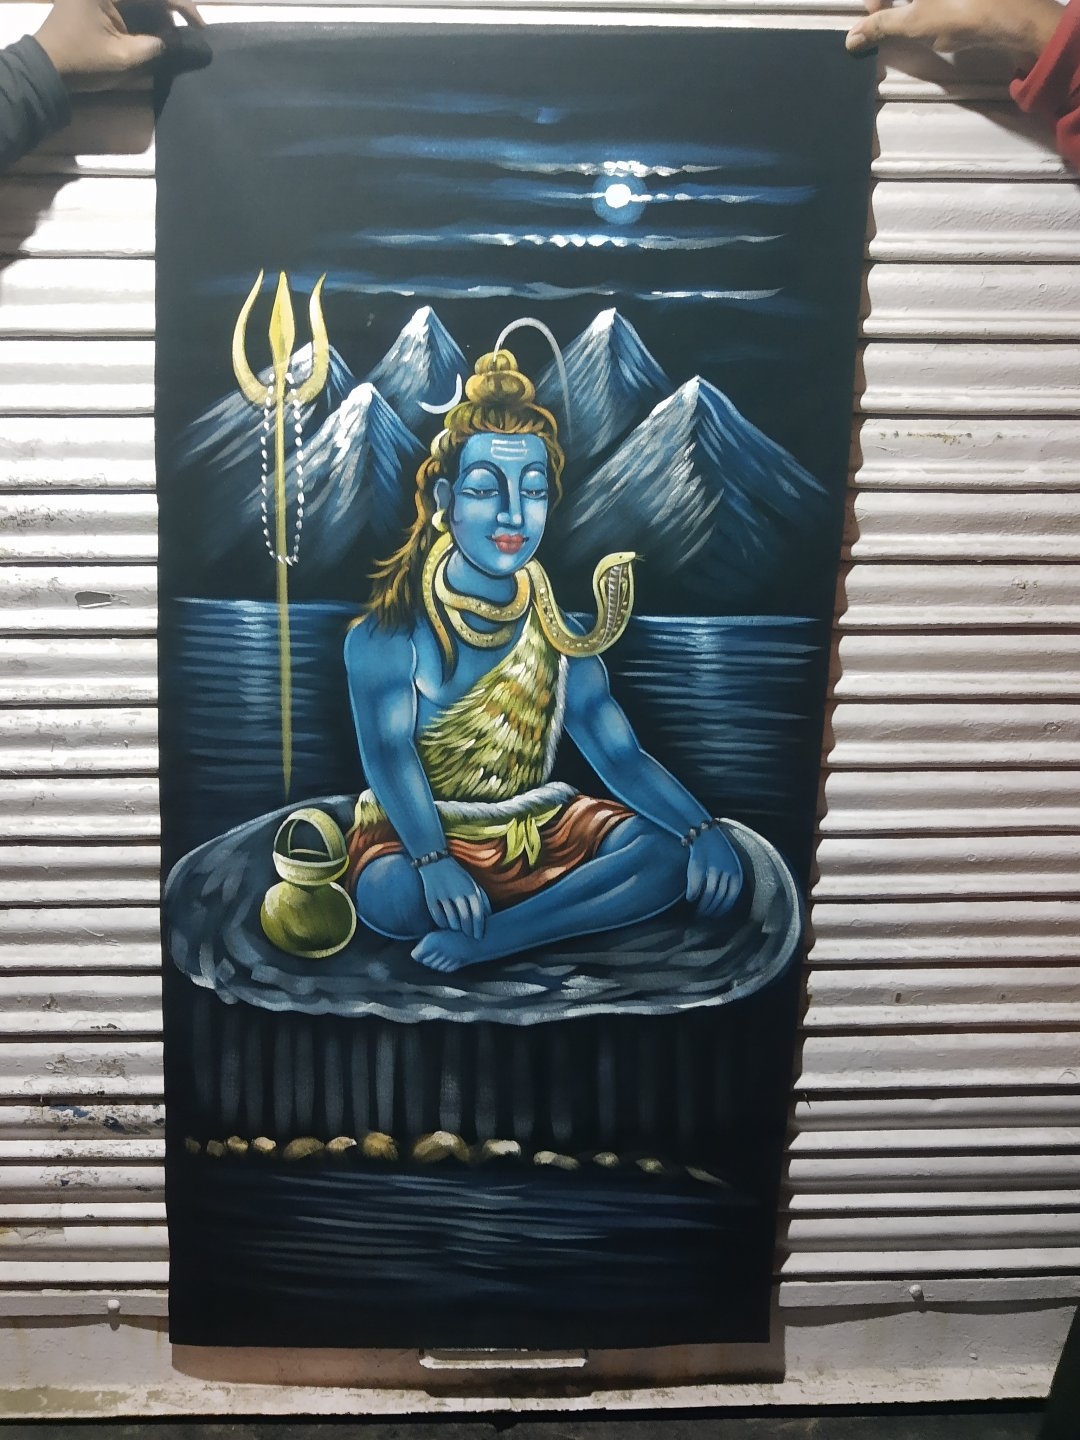 lord hanuman dualtone image white and blue | Hanuman images